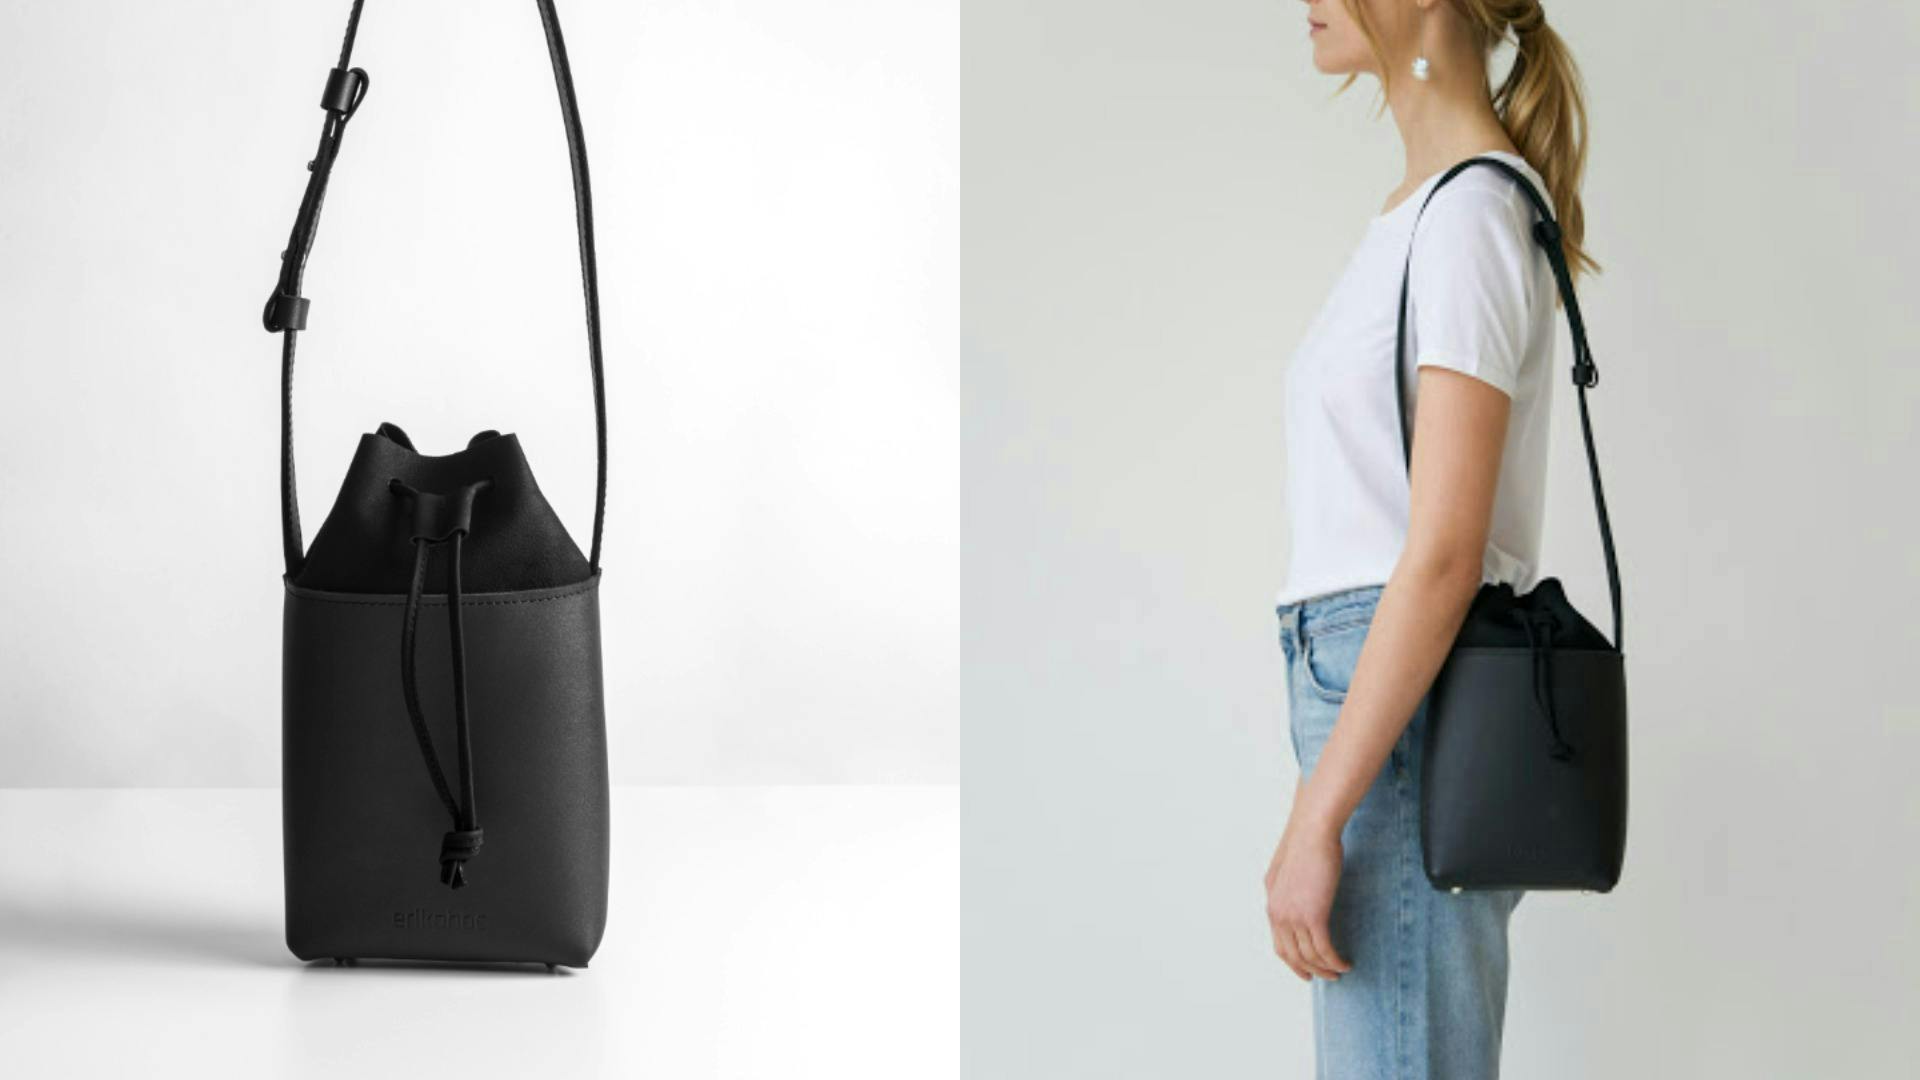 person human handbag bag accessories accessory purse clothing apparel